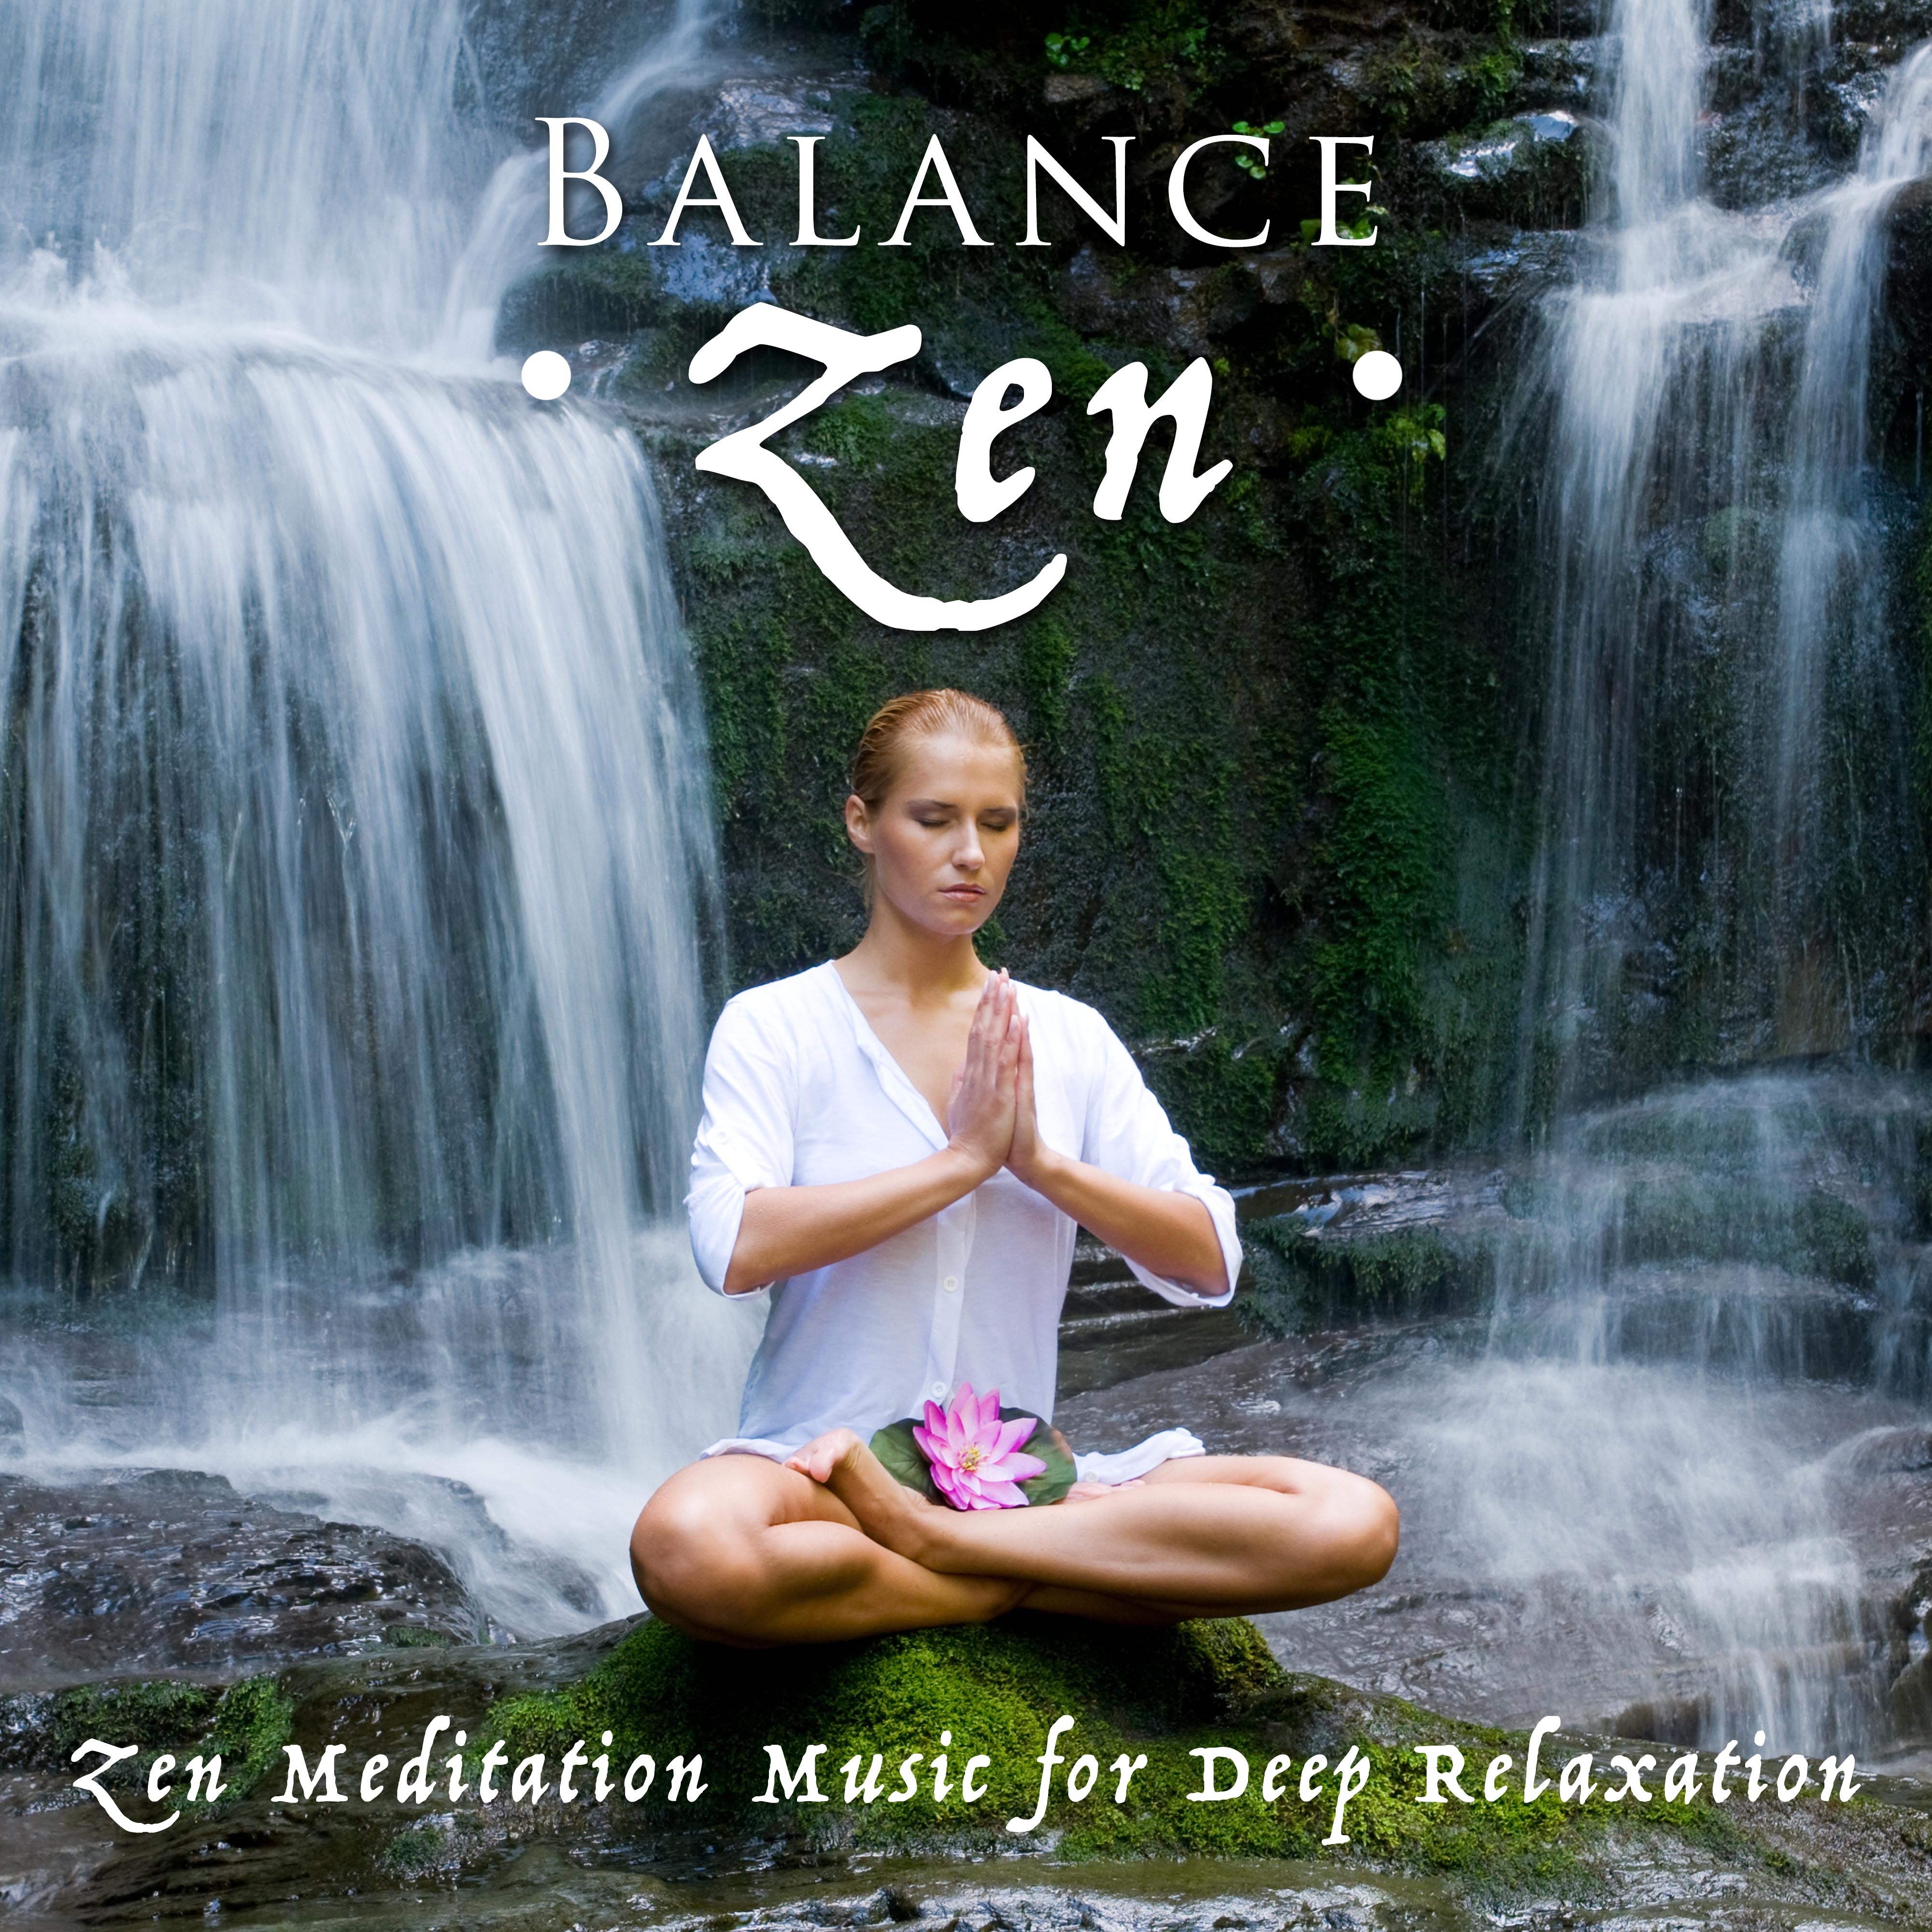 Meditation: Background Calm